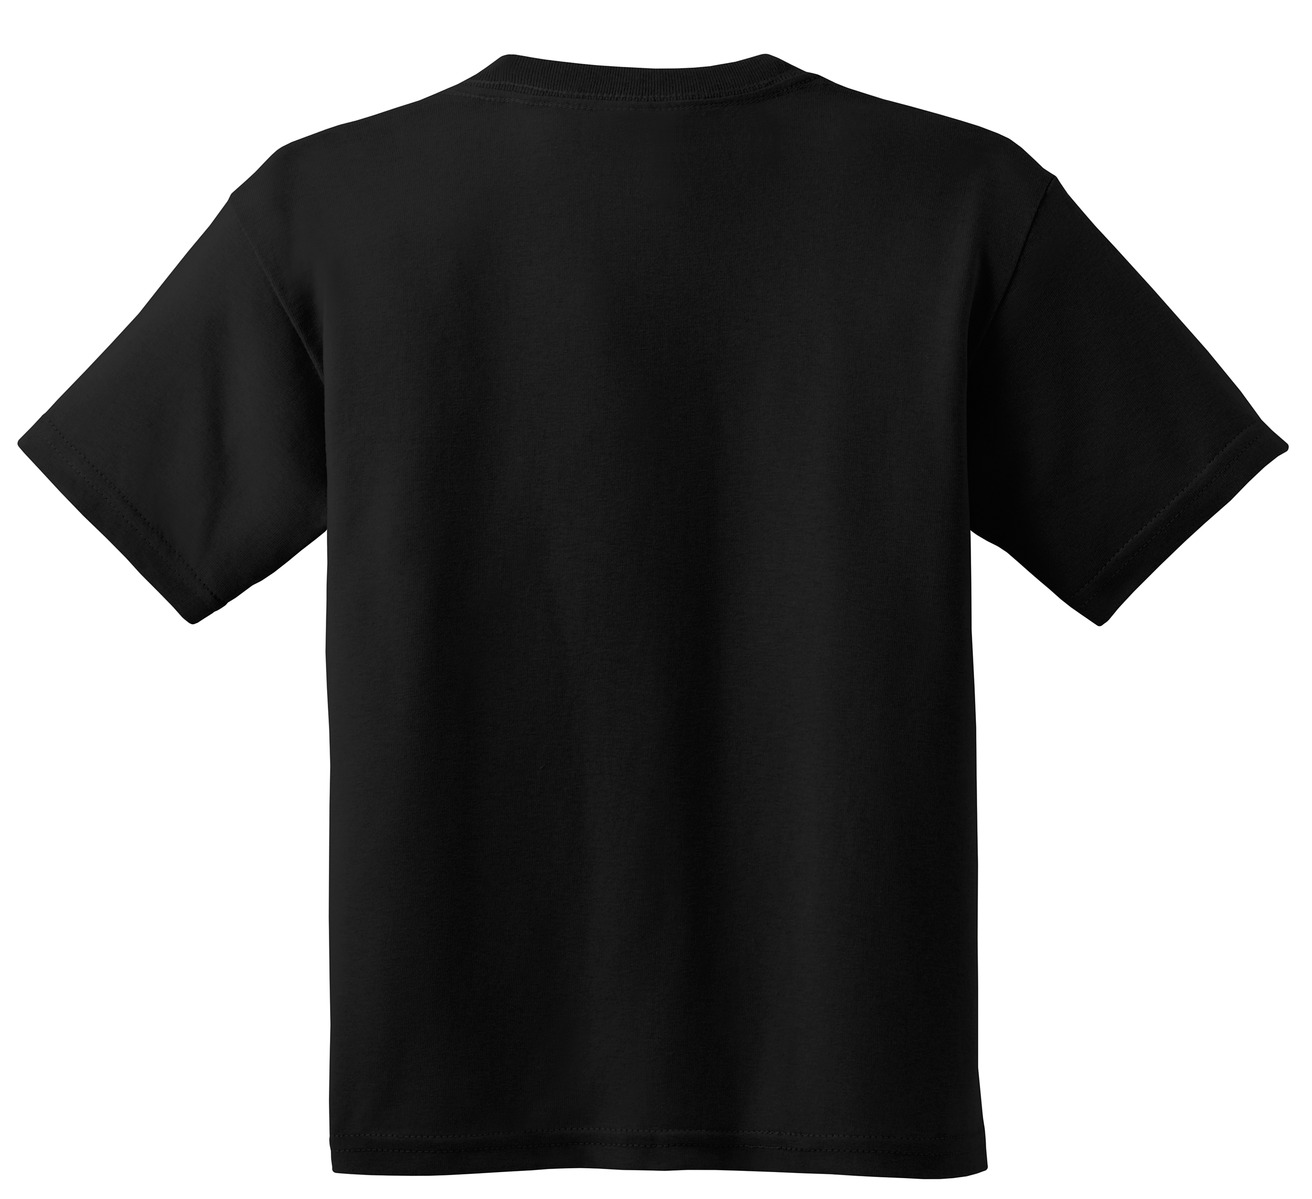 Artix - Big Boys T-Shirts and Tank Tops, up to Big Boys Size 24 - San Francisco - image 5 of 5